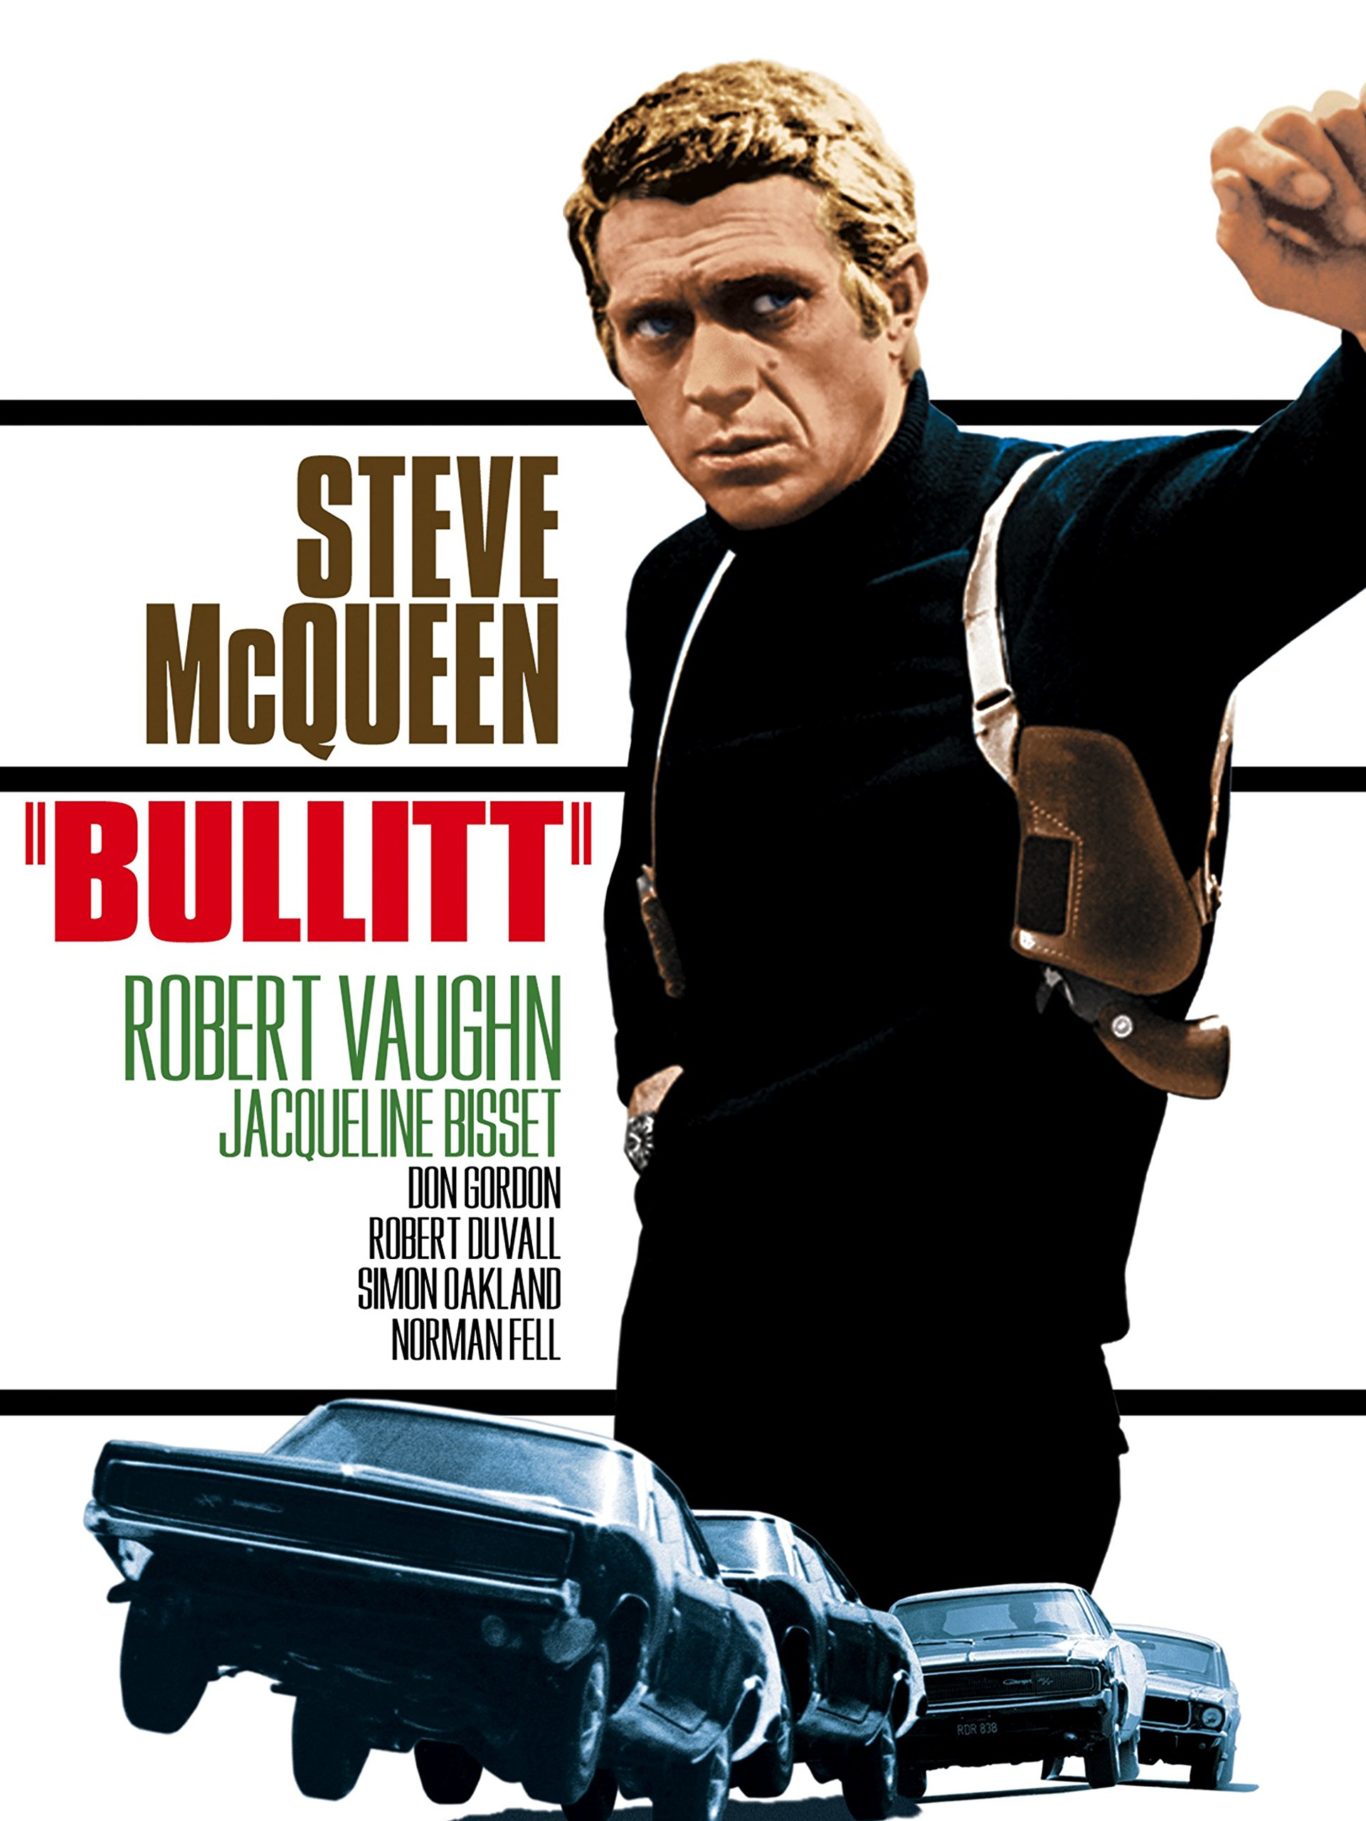 Bullitt is a motoring movie classic